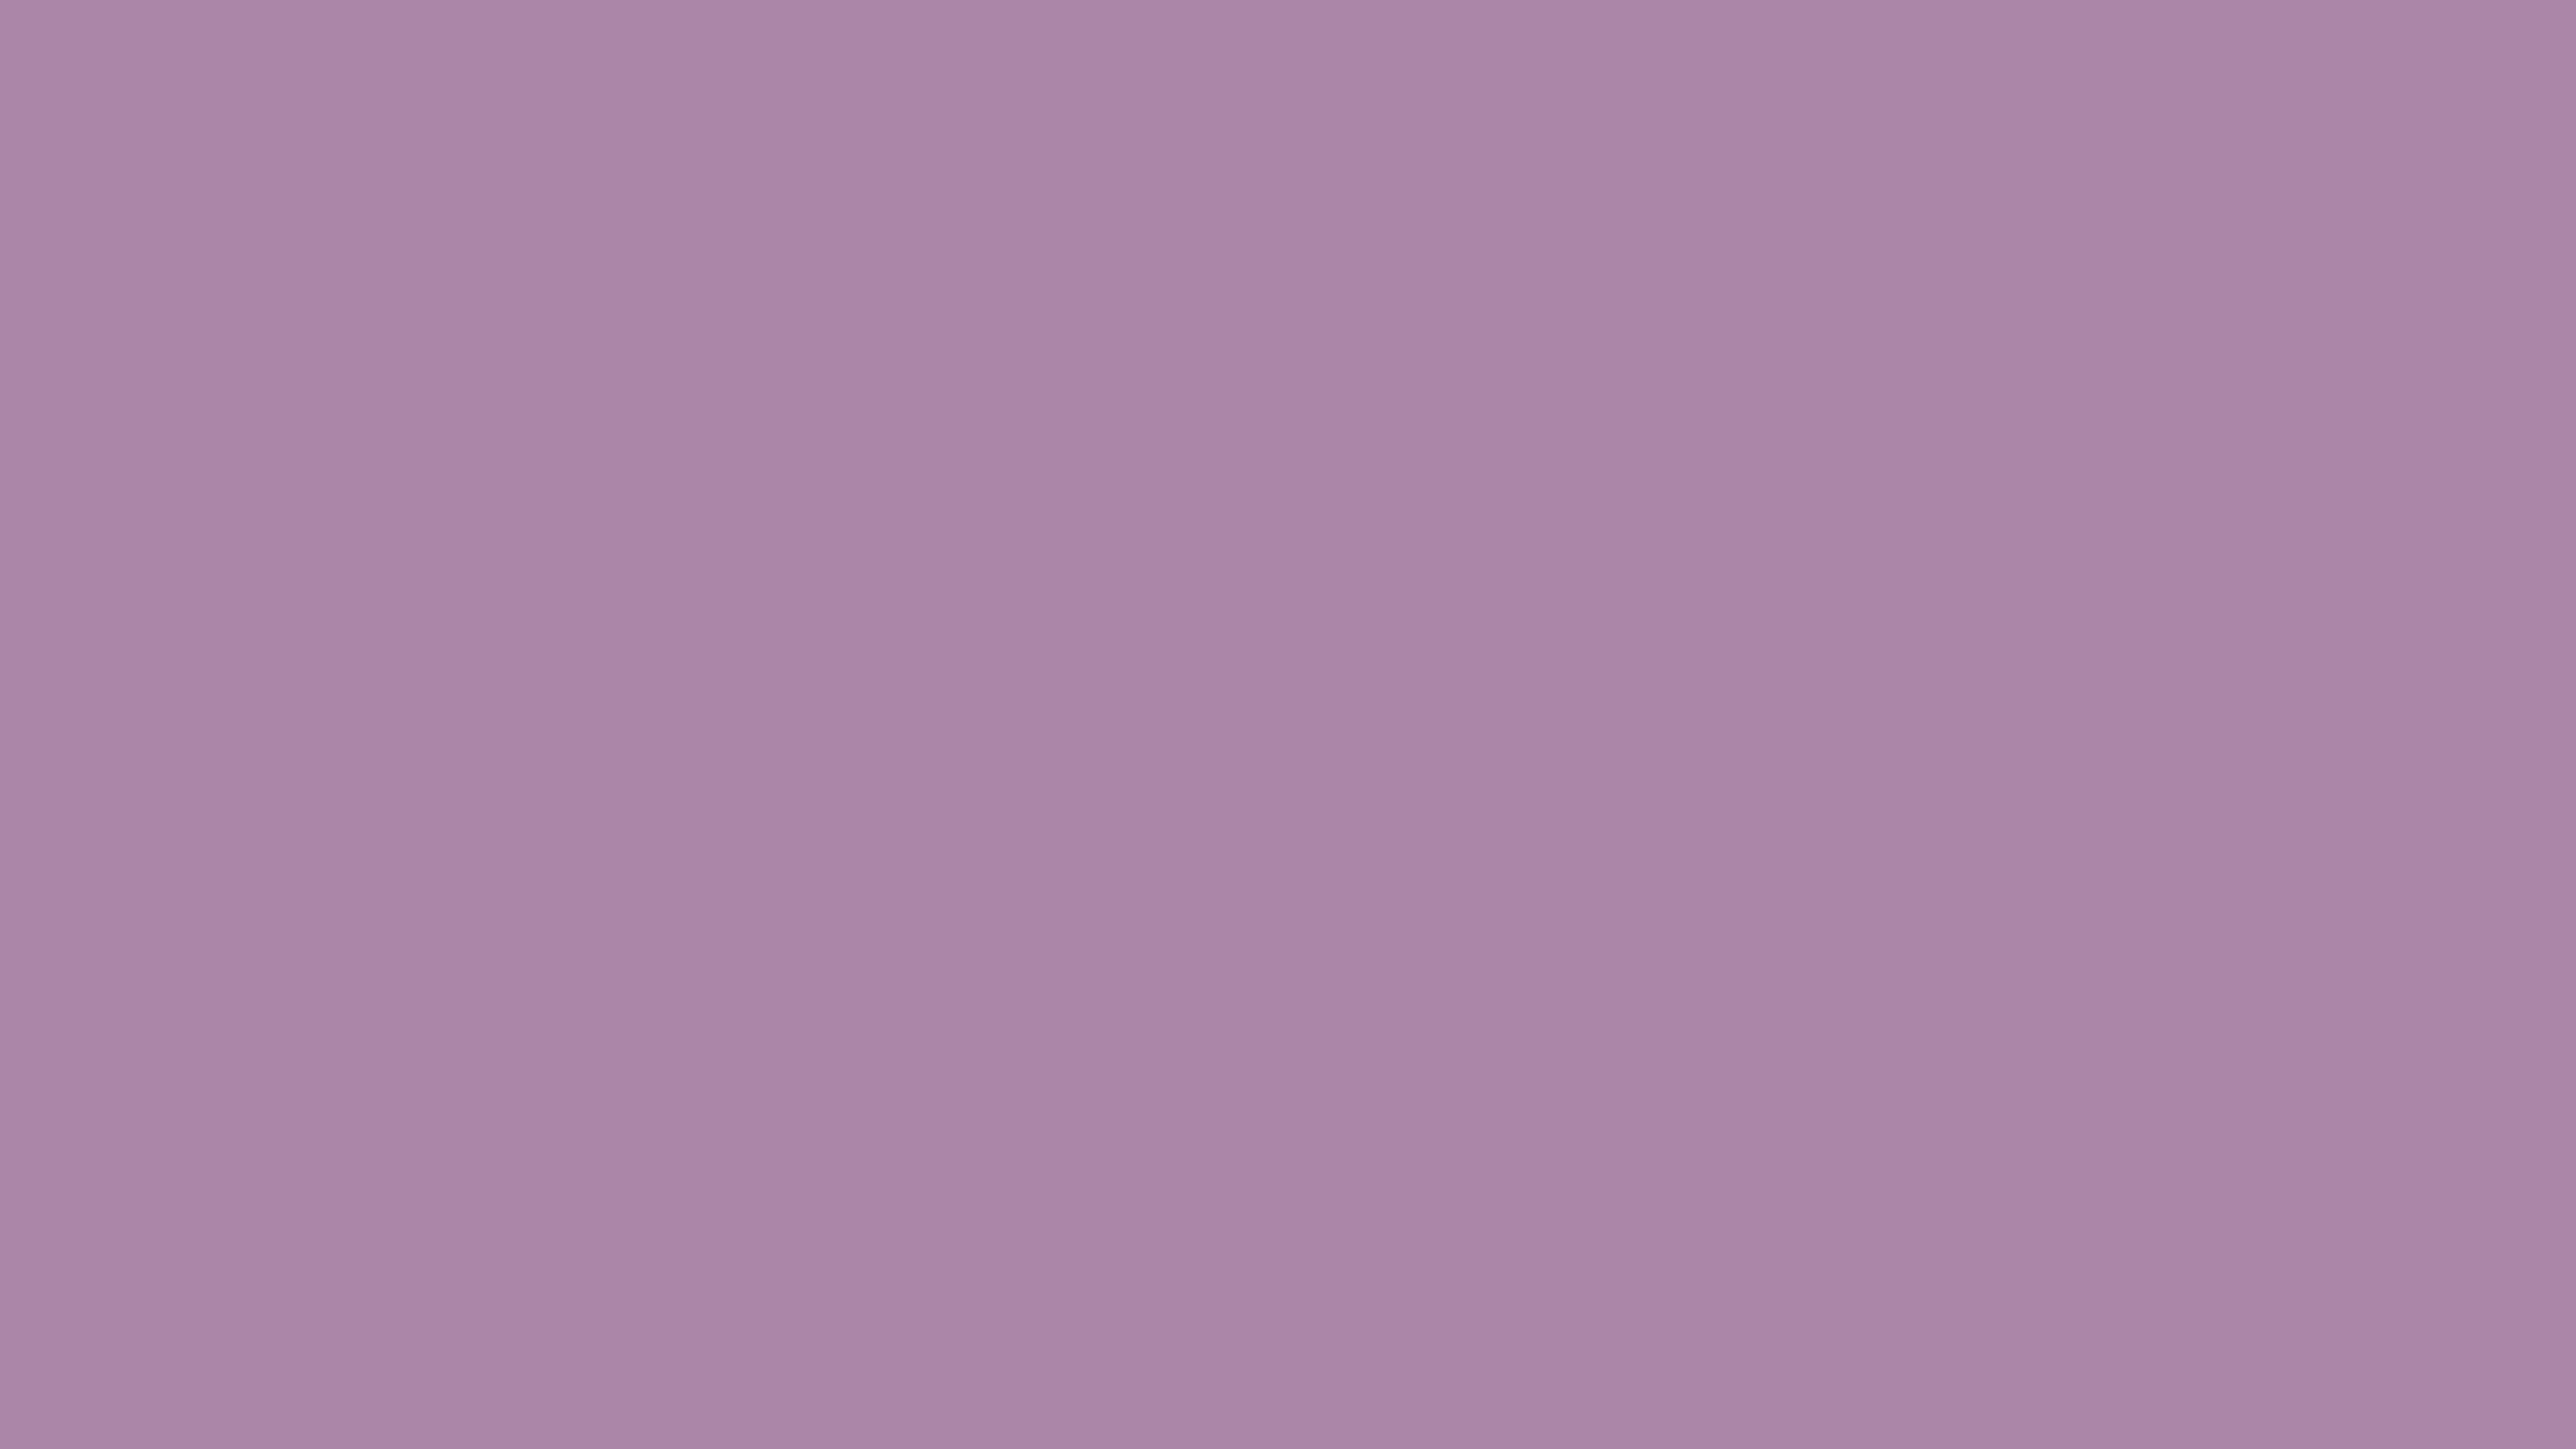 Dusty Lavender Solid Color Background Image